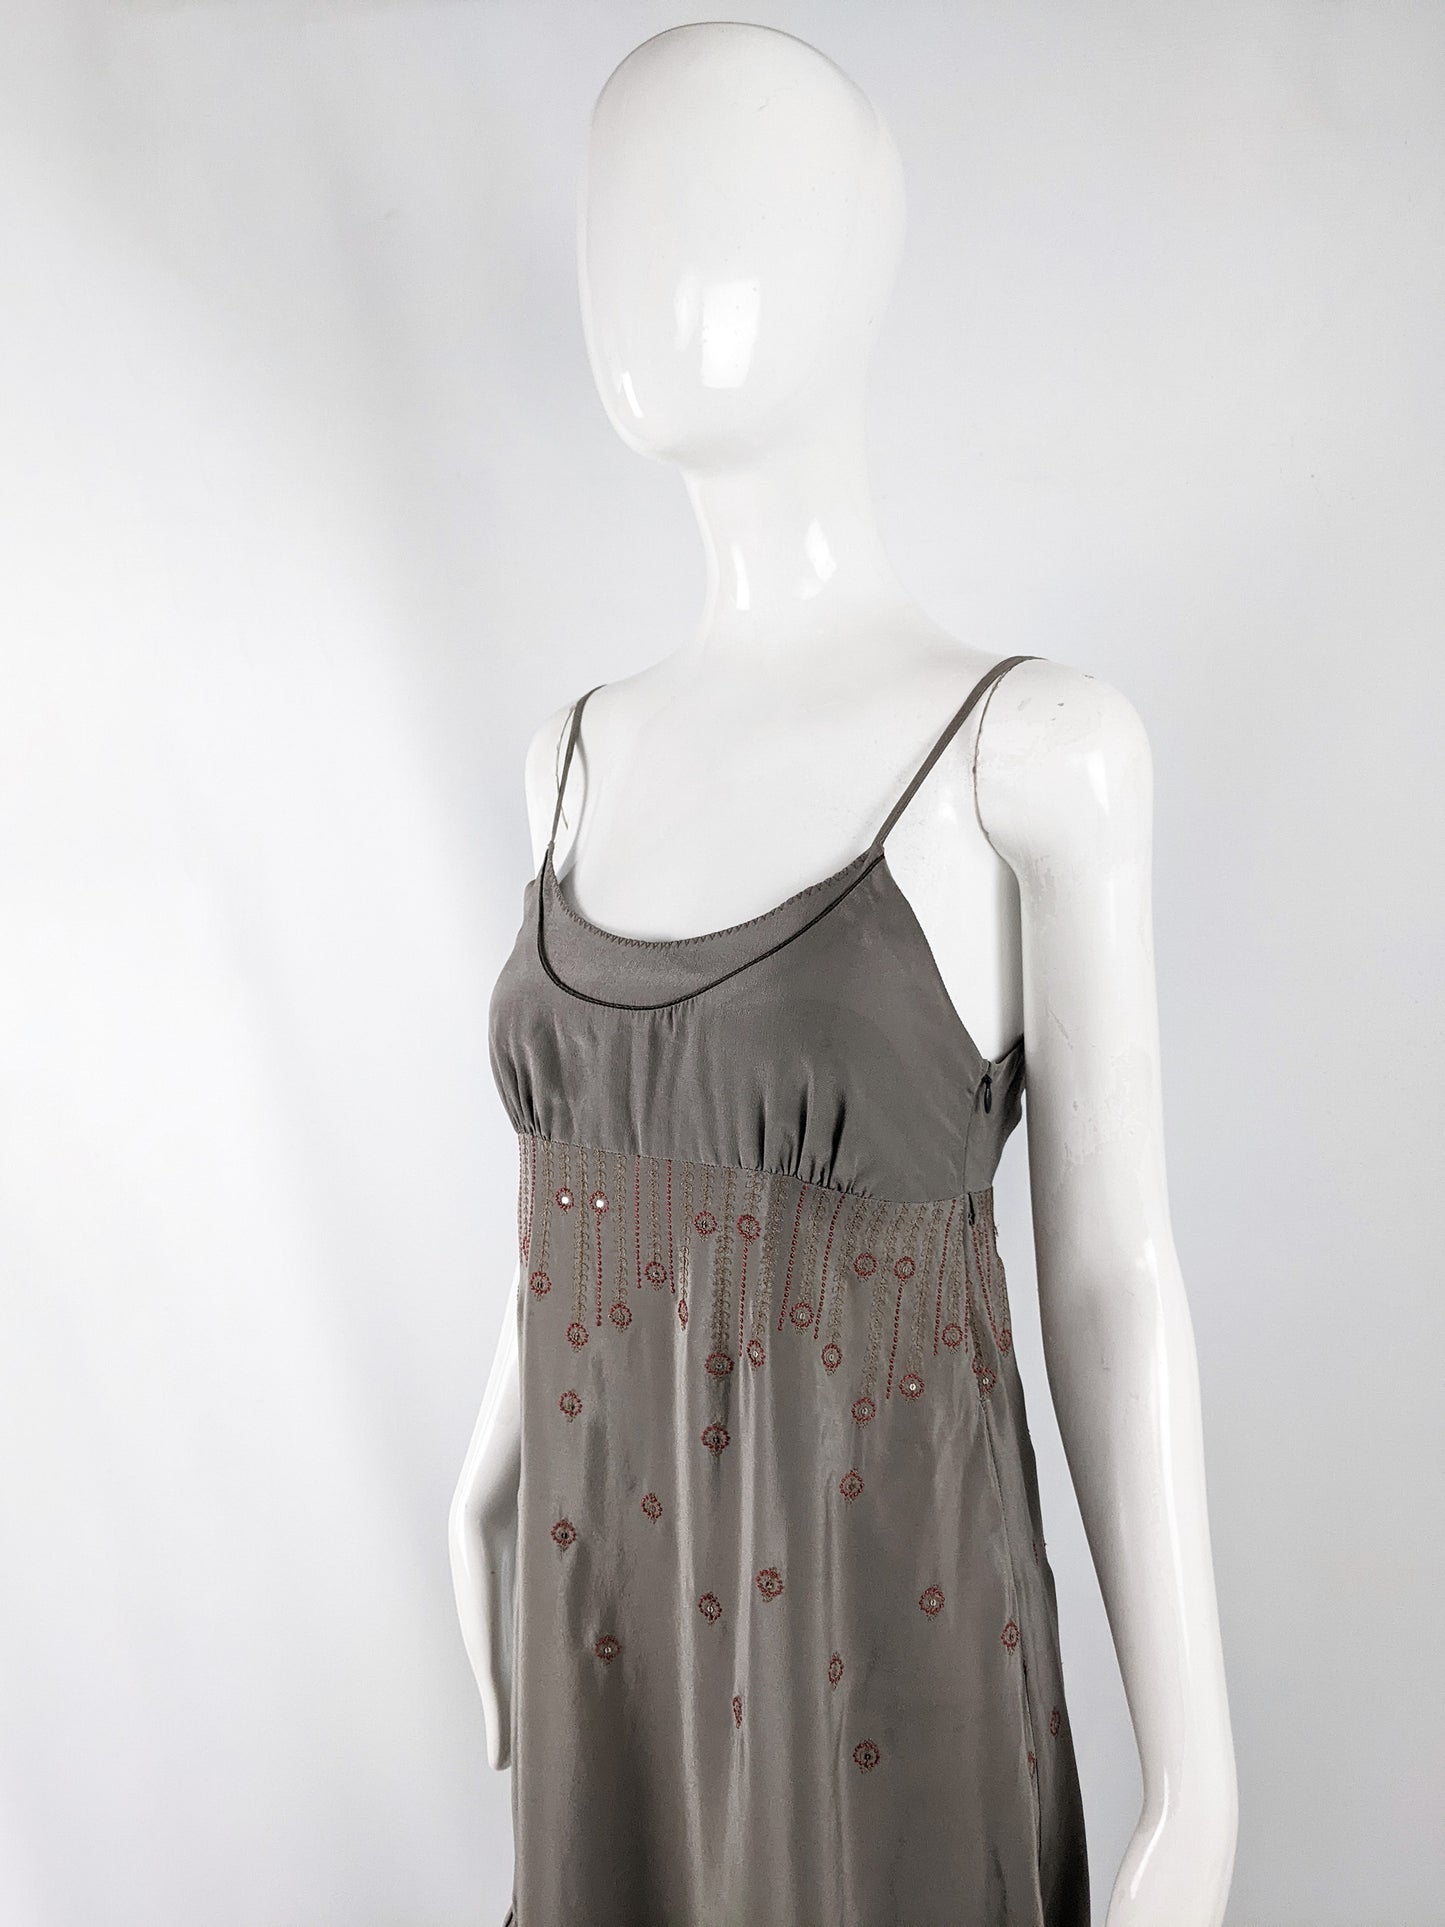 Sandro Paris Vintage y2k Taupe Silk Embroidered Dress, 2000s